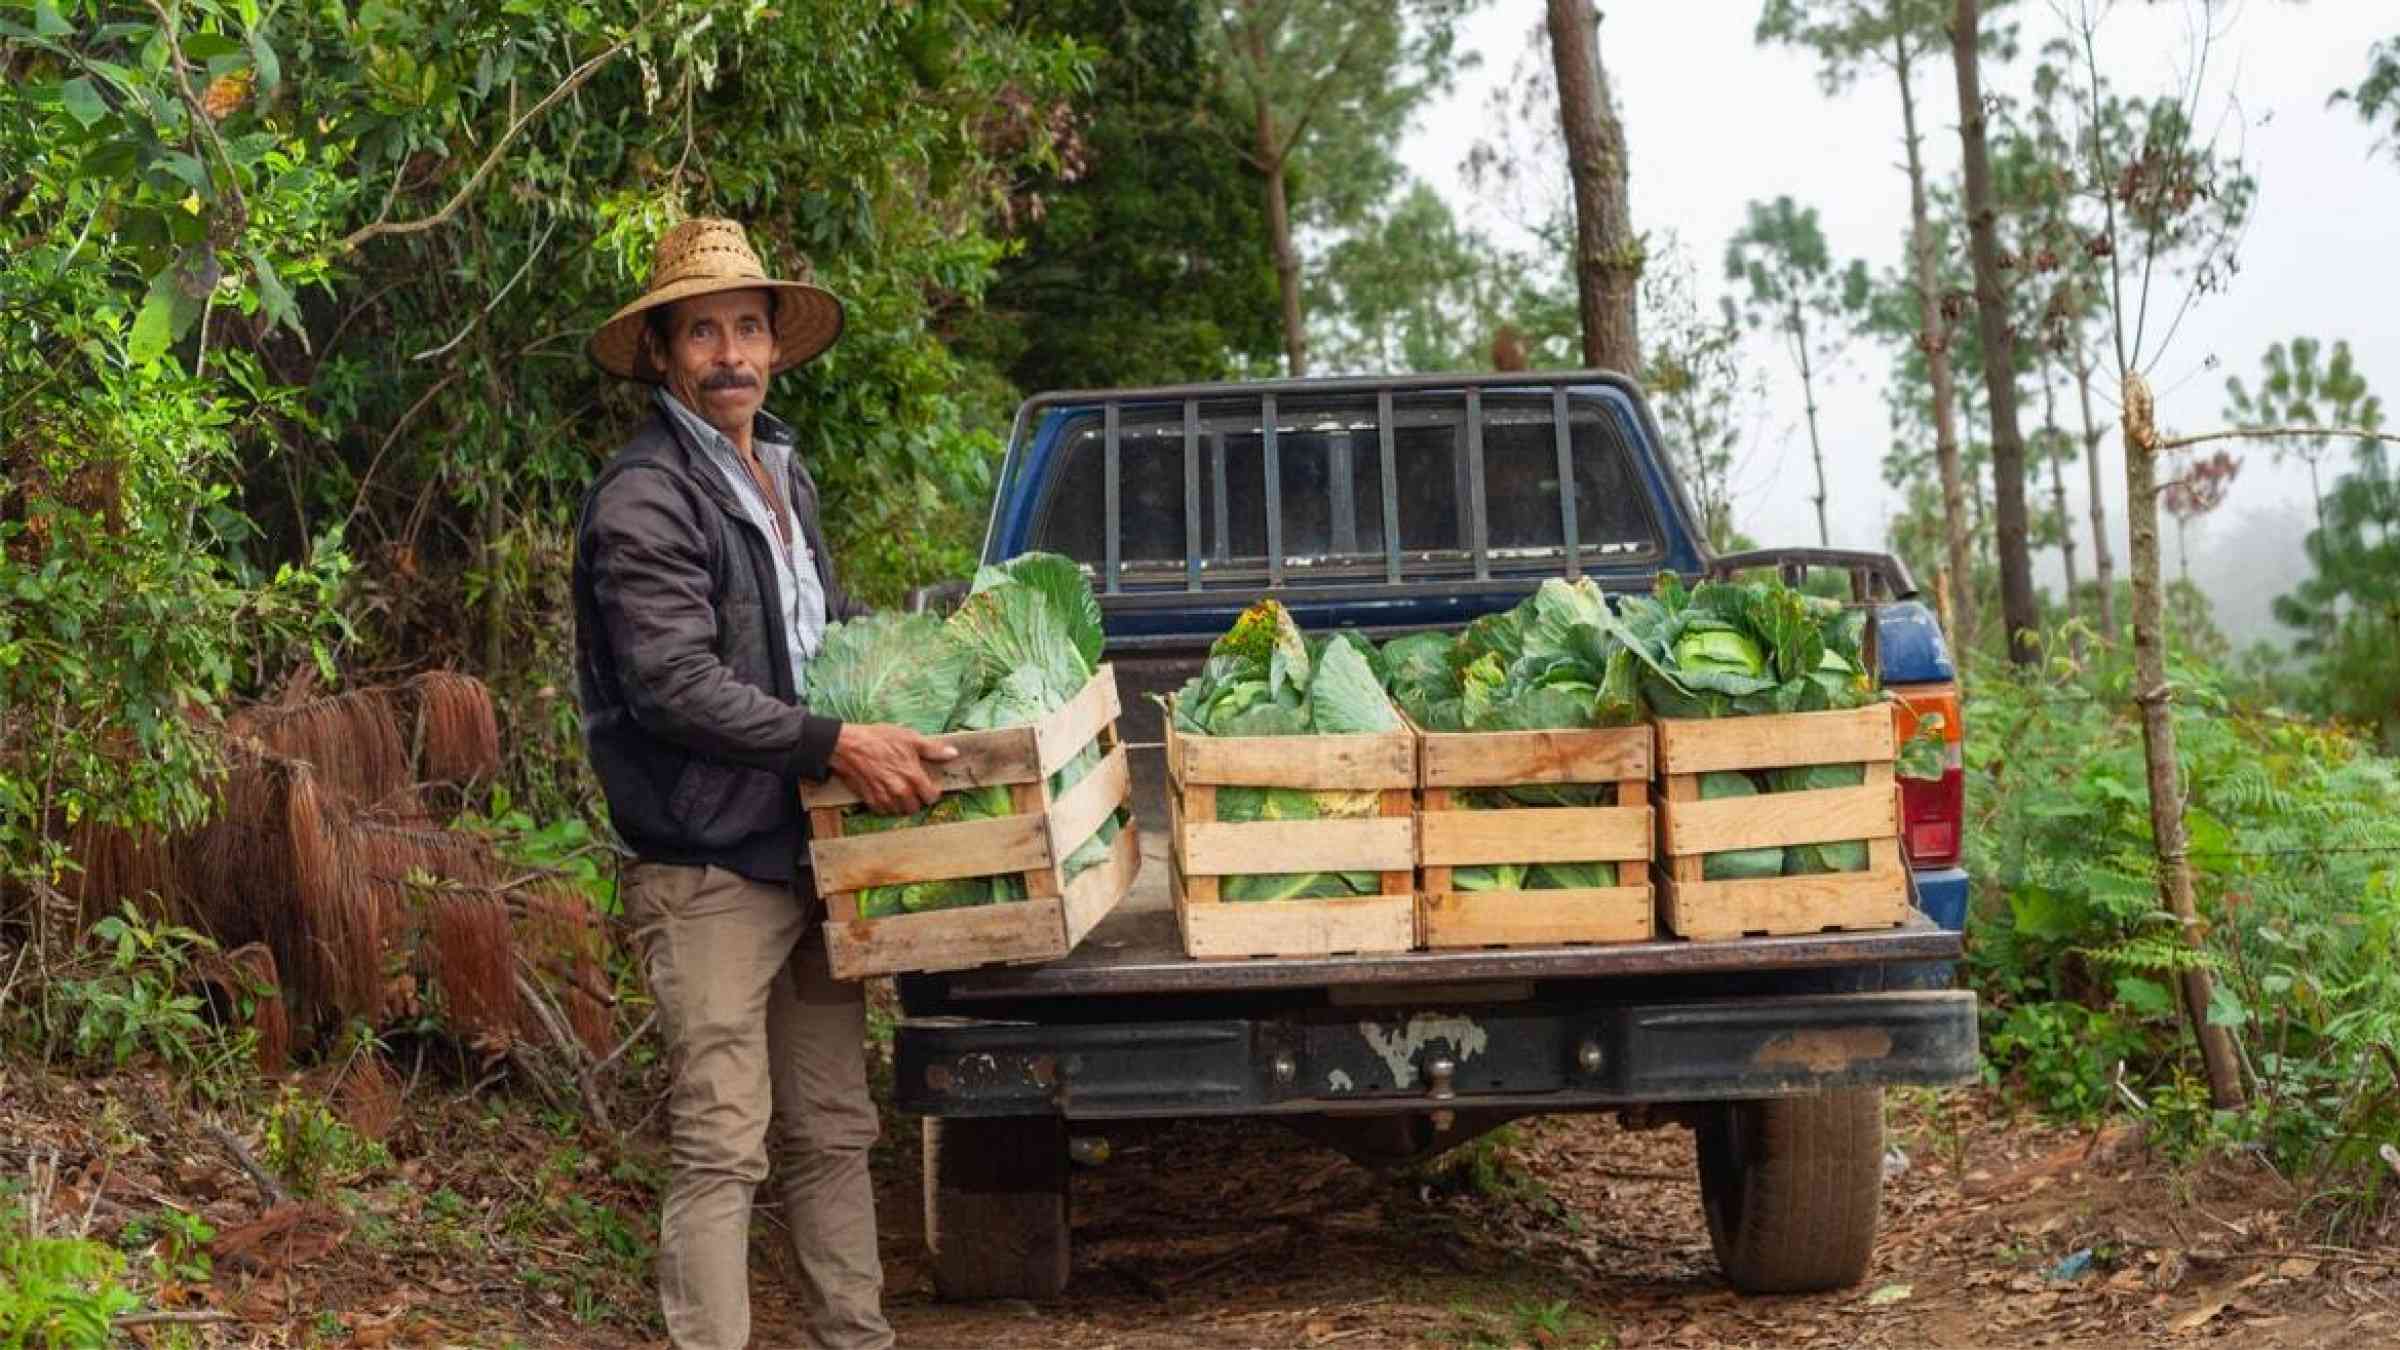 A farmer loads farm produce into a truck